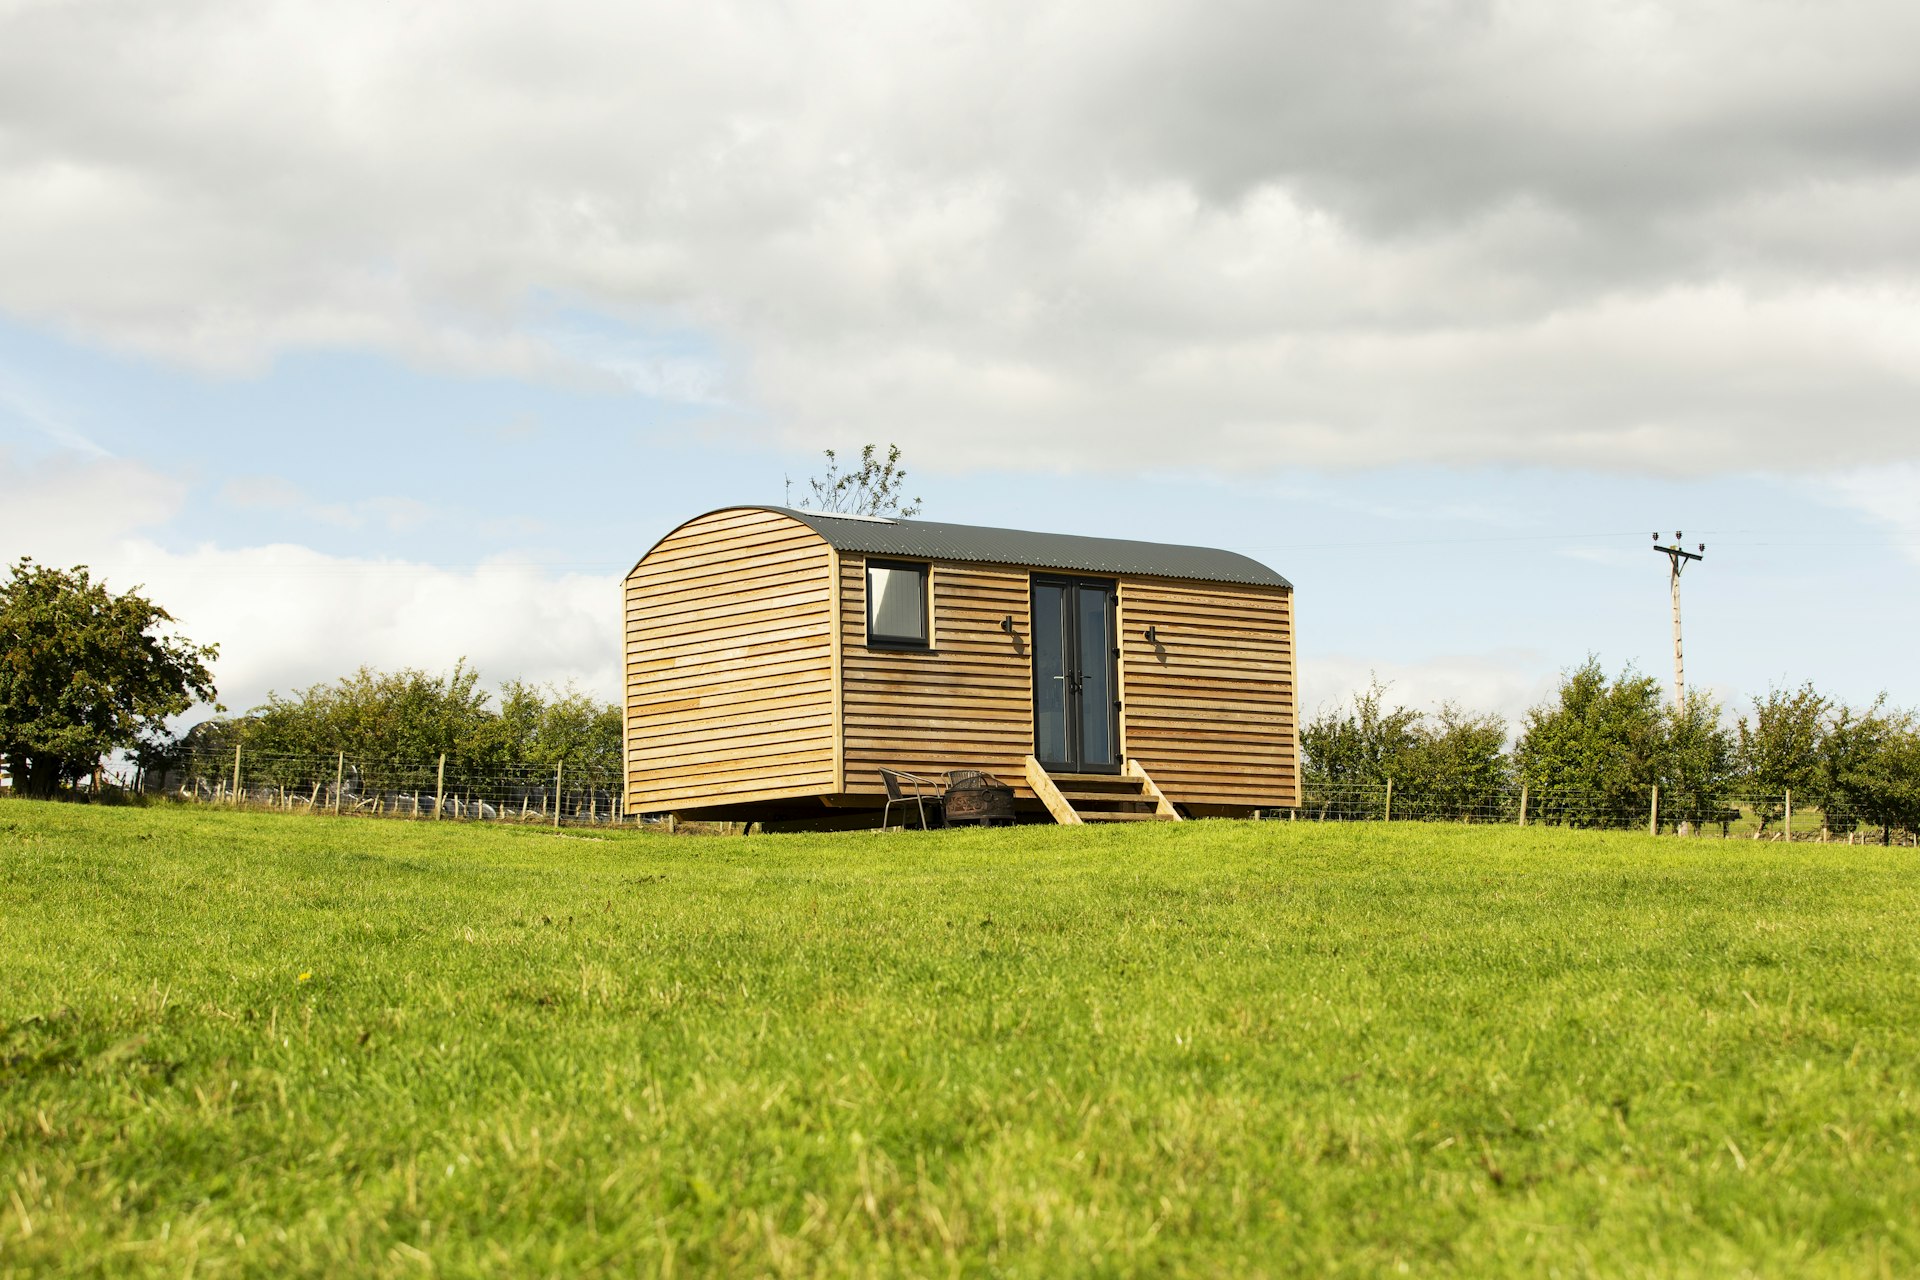 A modern wooden hut stands alone in a green field